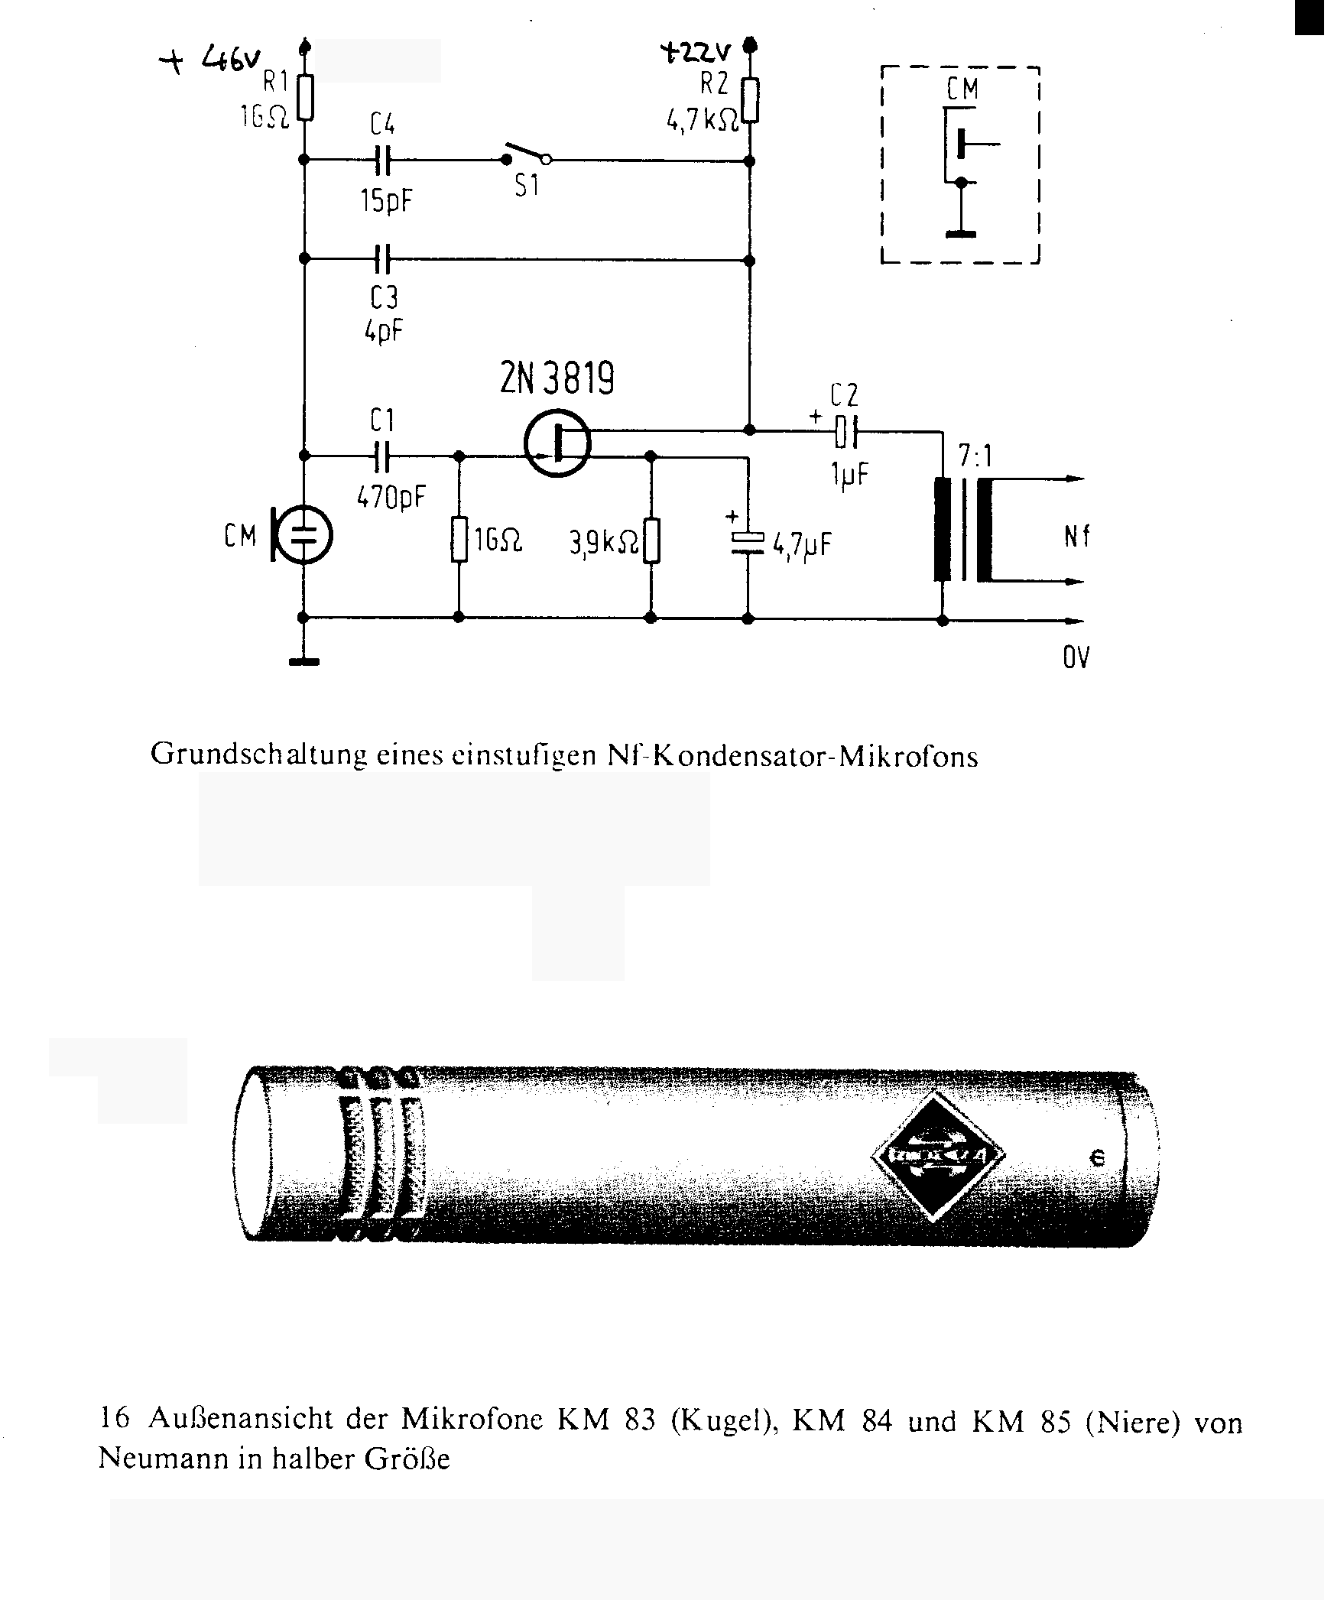 Neumann km83, km84, km85 schematic